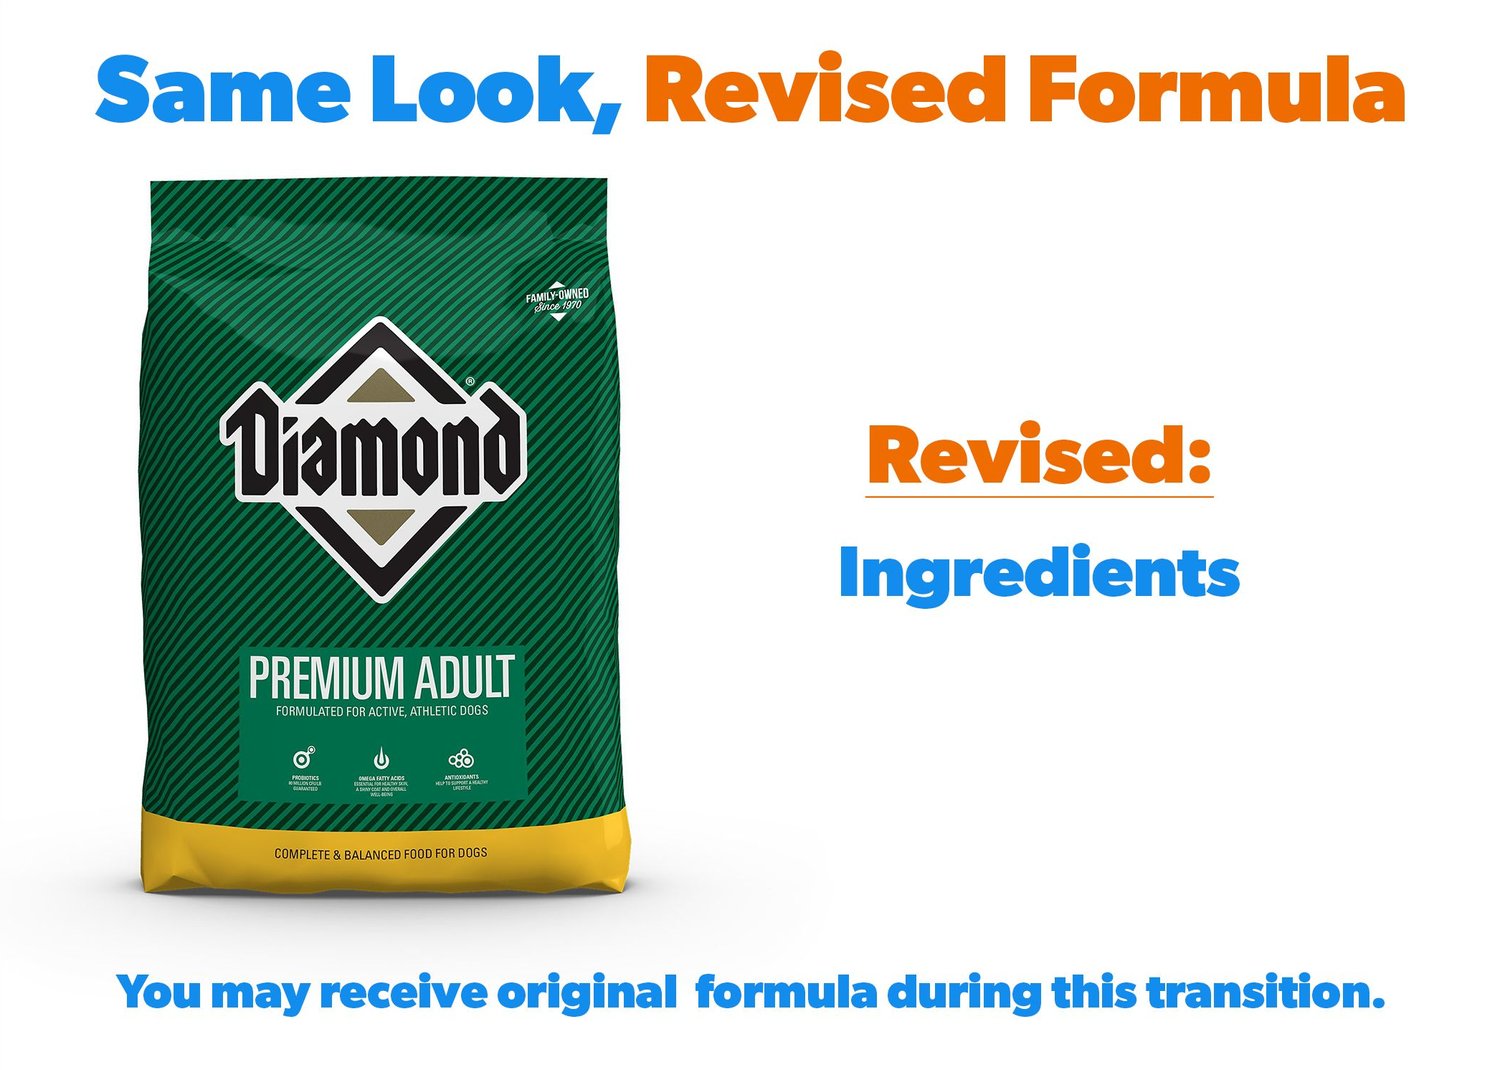 diamond premium dog food